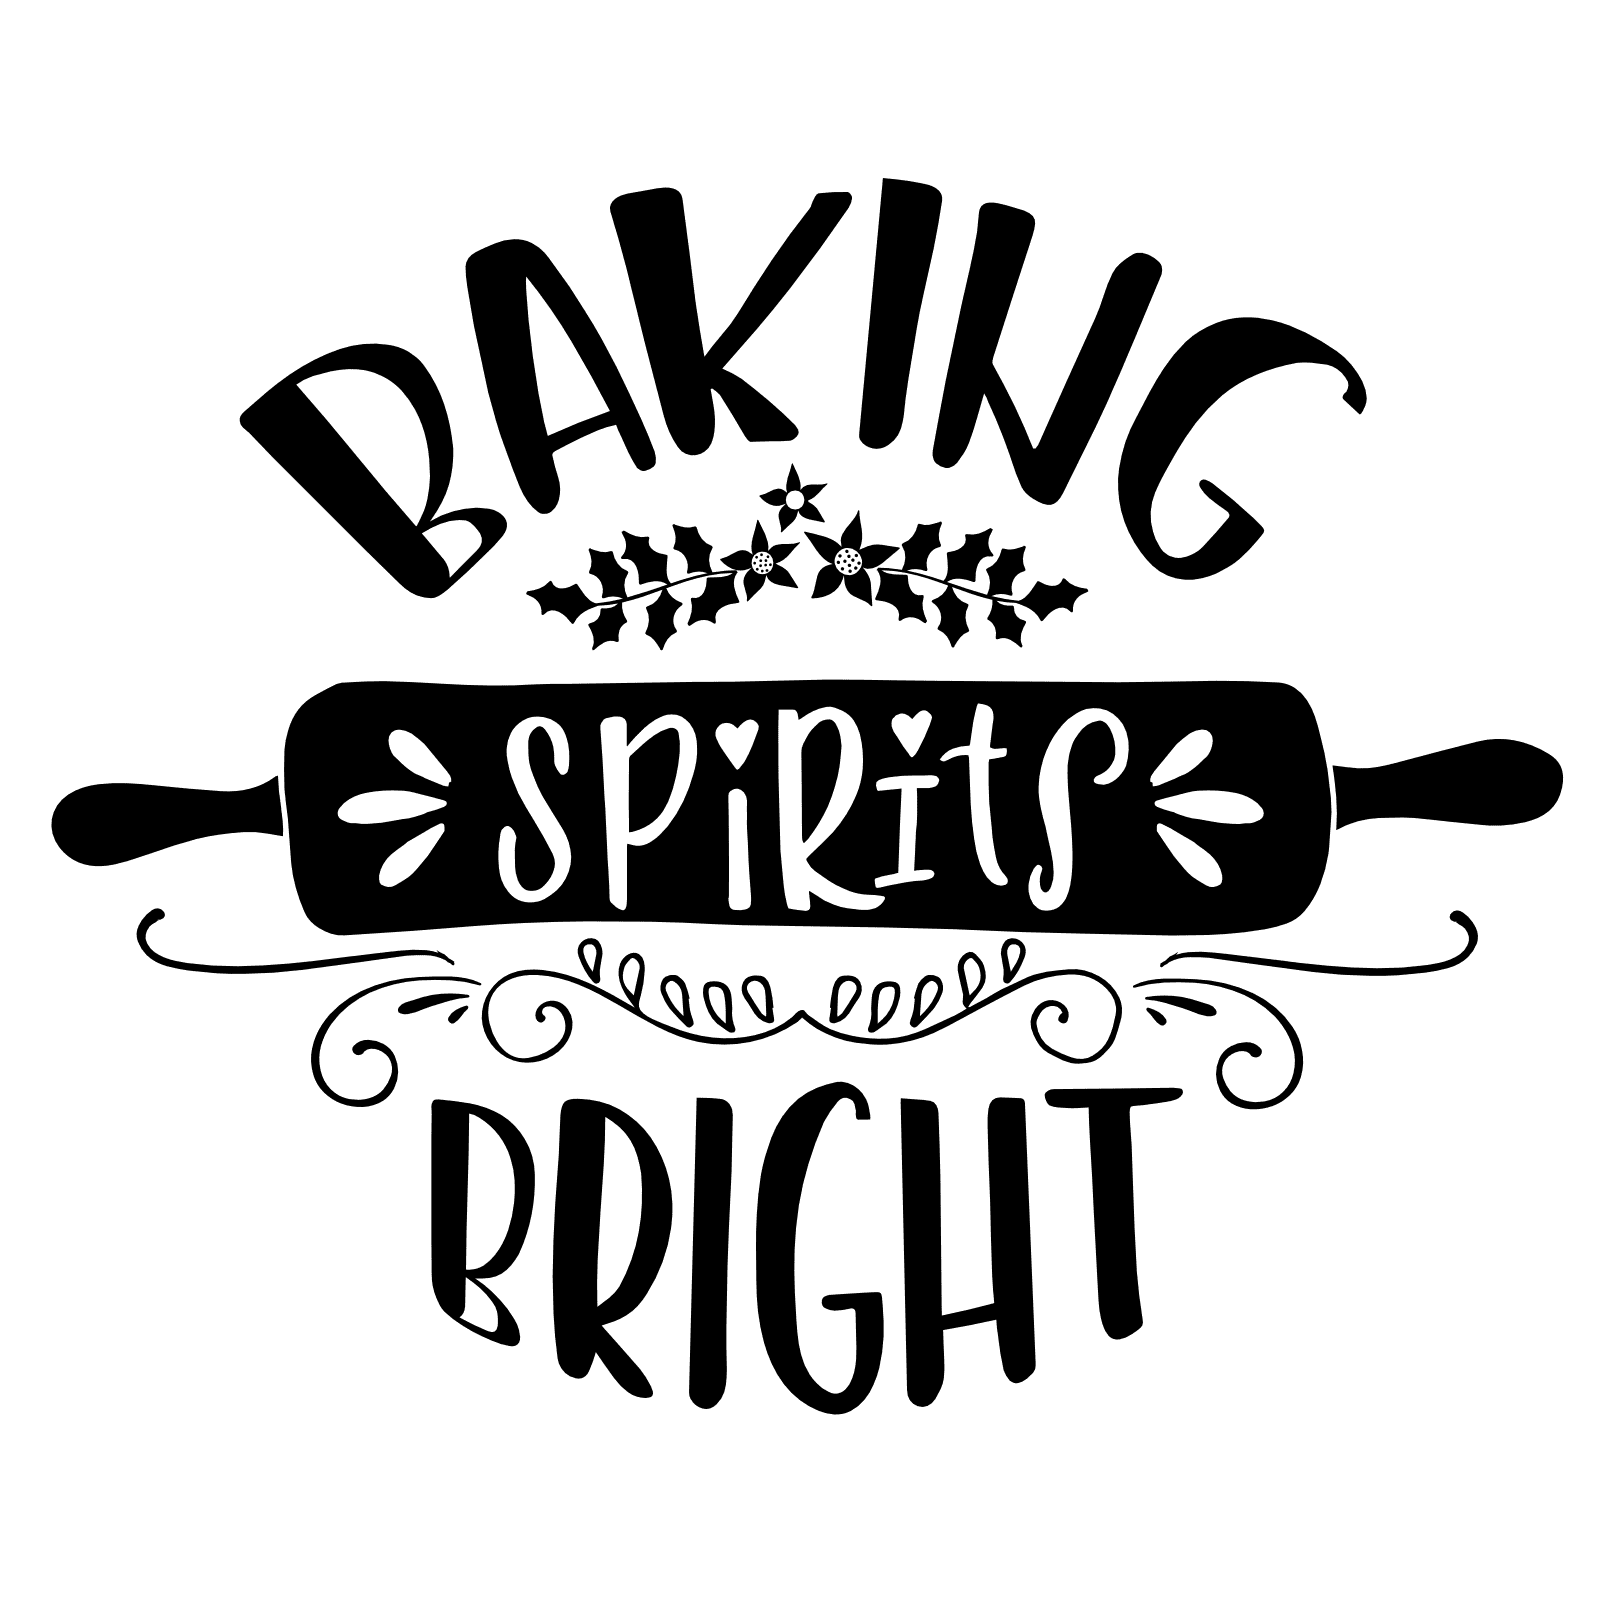 baking spirits bright lifetime